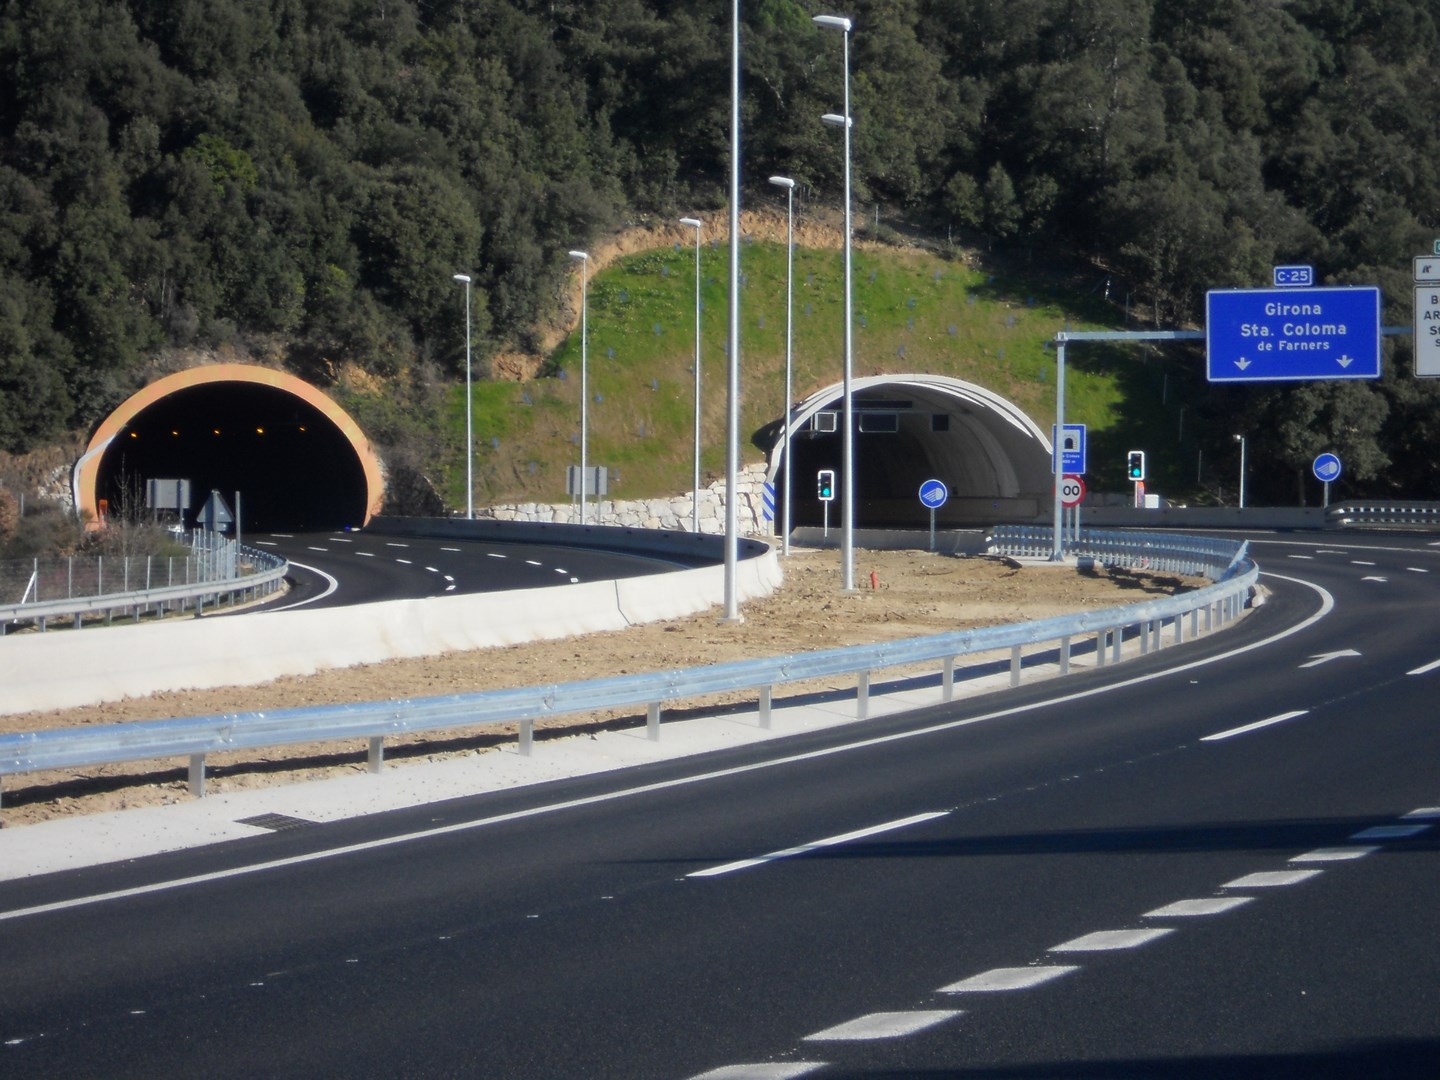 Eix transversal tunnel entrance